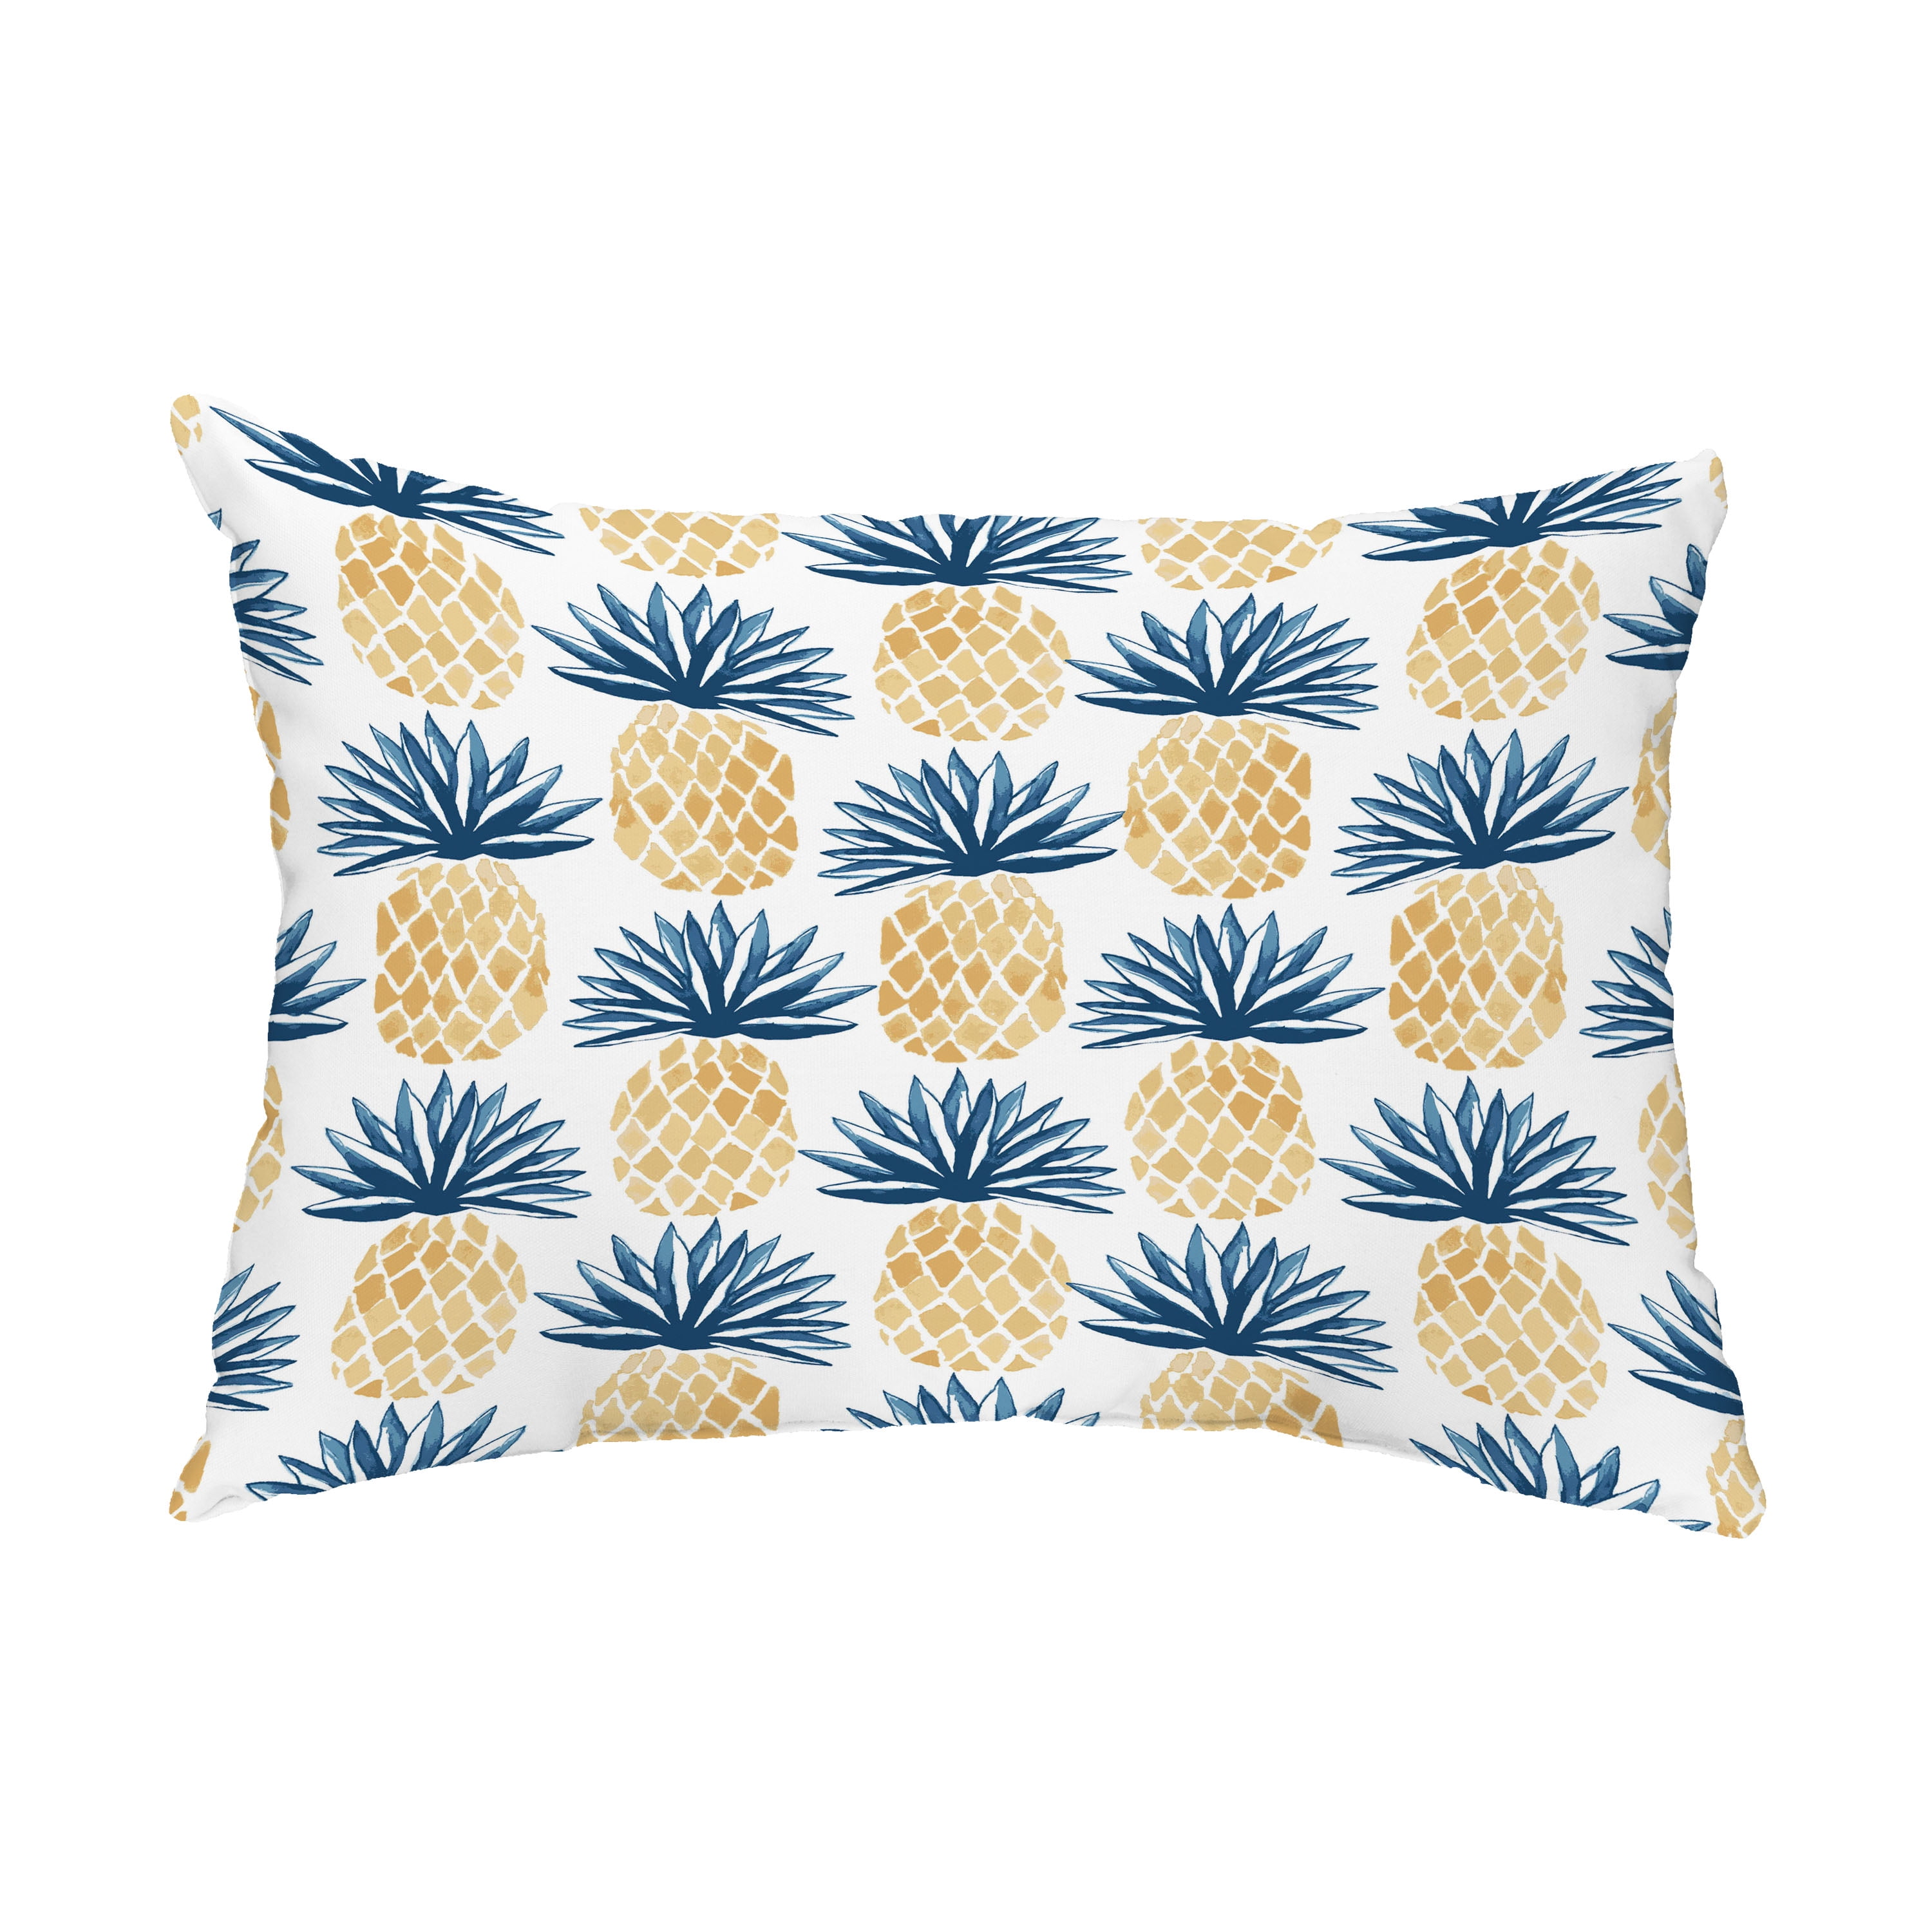 Outdoor White Tropical Bird Pinapple Decorative Throw Pillows Choose Size In 